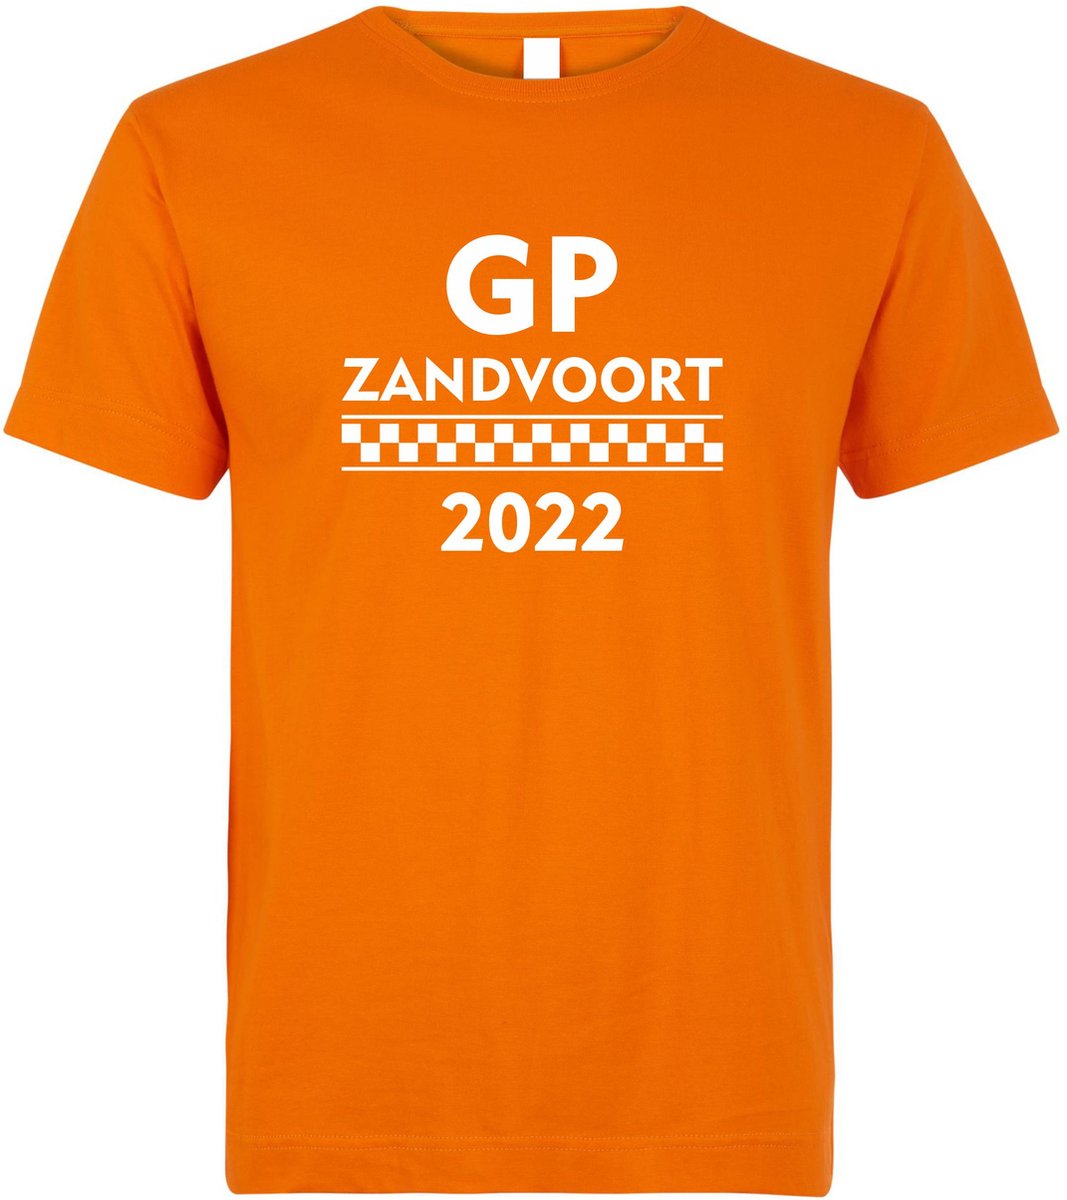 T-shirt kinderen GP Zandvoort 2022 | Max Verstappen / Red Bull Racing / Formule 1 fan | Grand Prix Circuit Zandvoort | kleding shirt | Oranje | maat 116